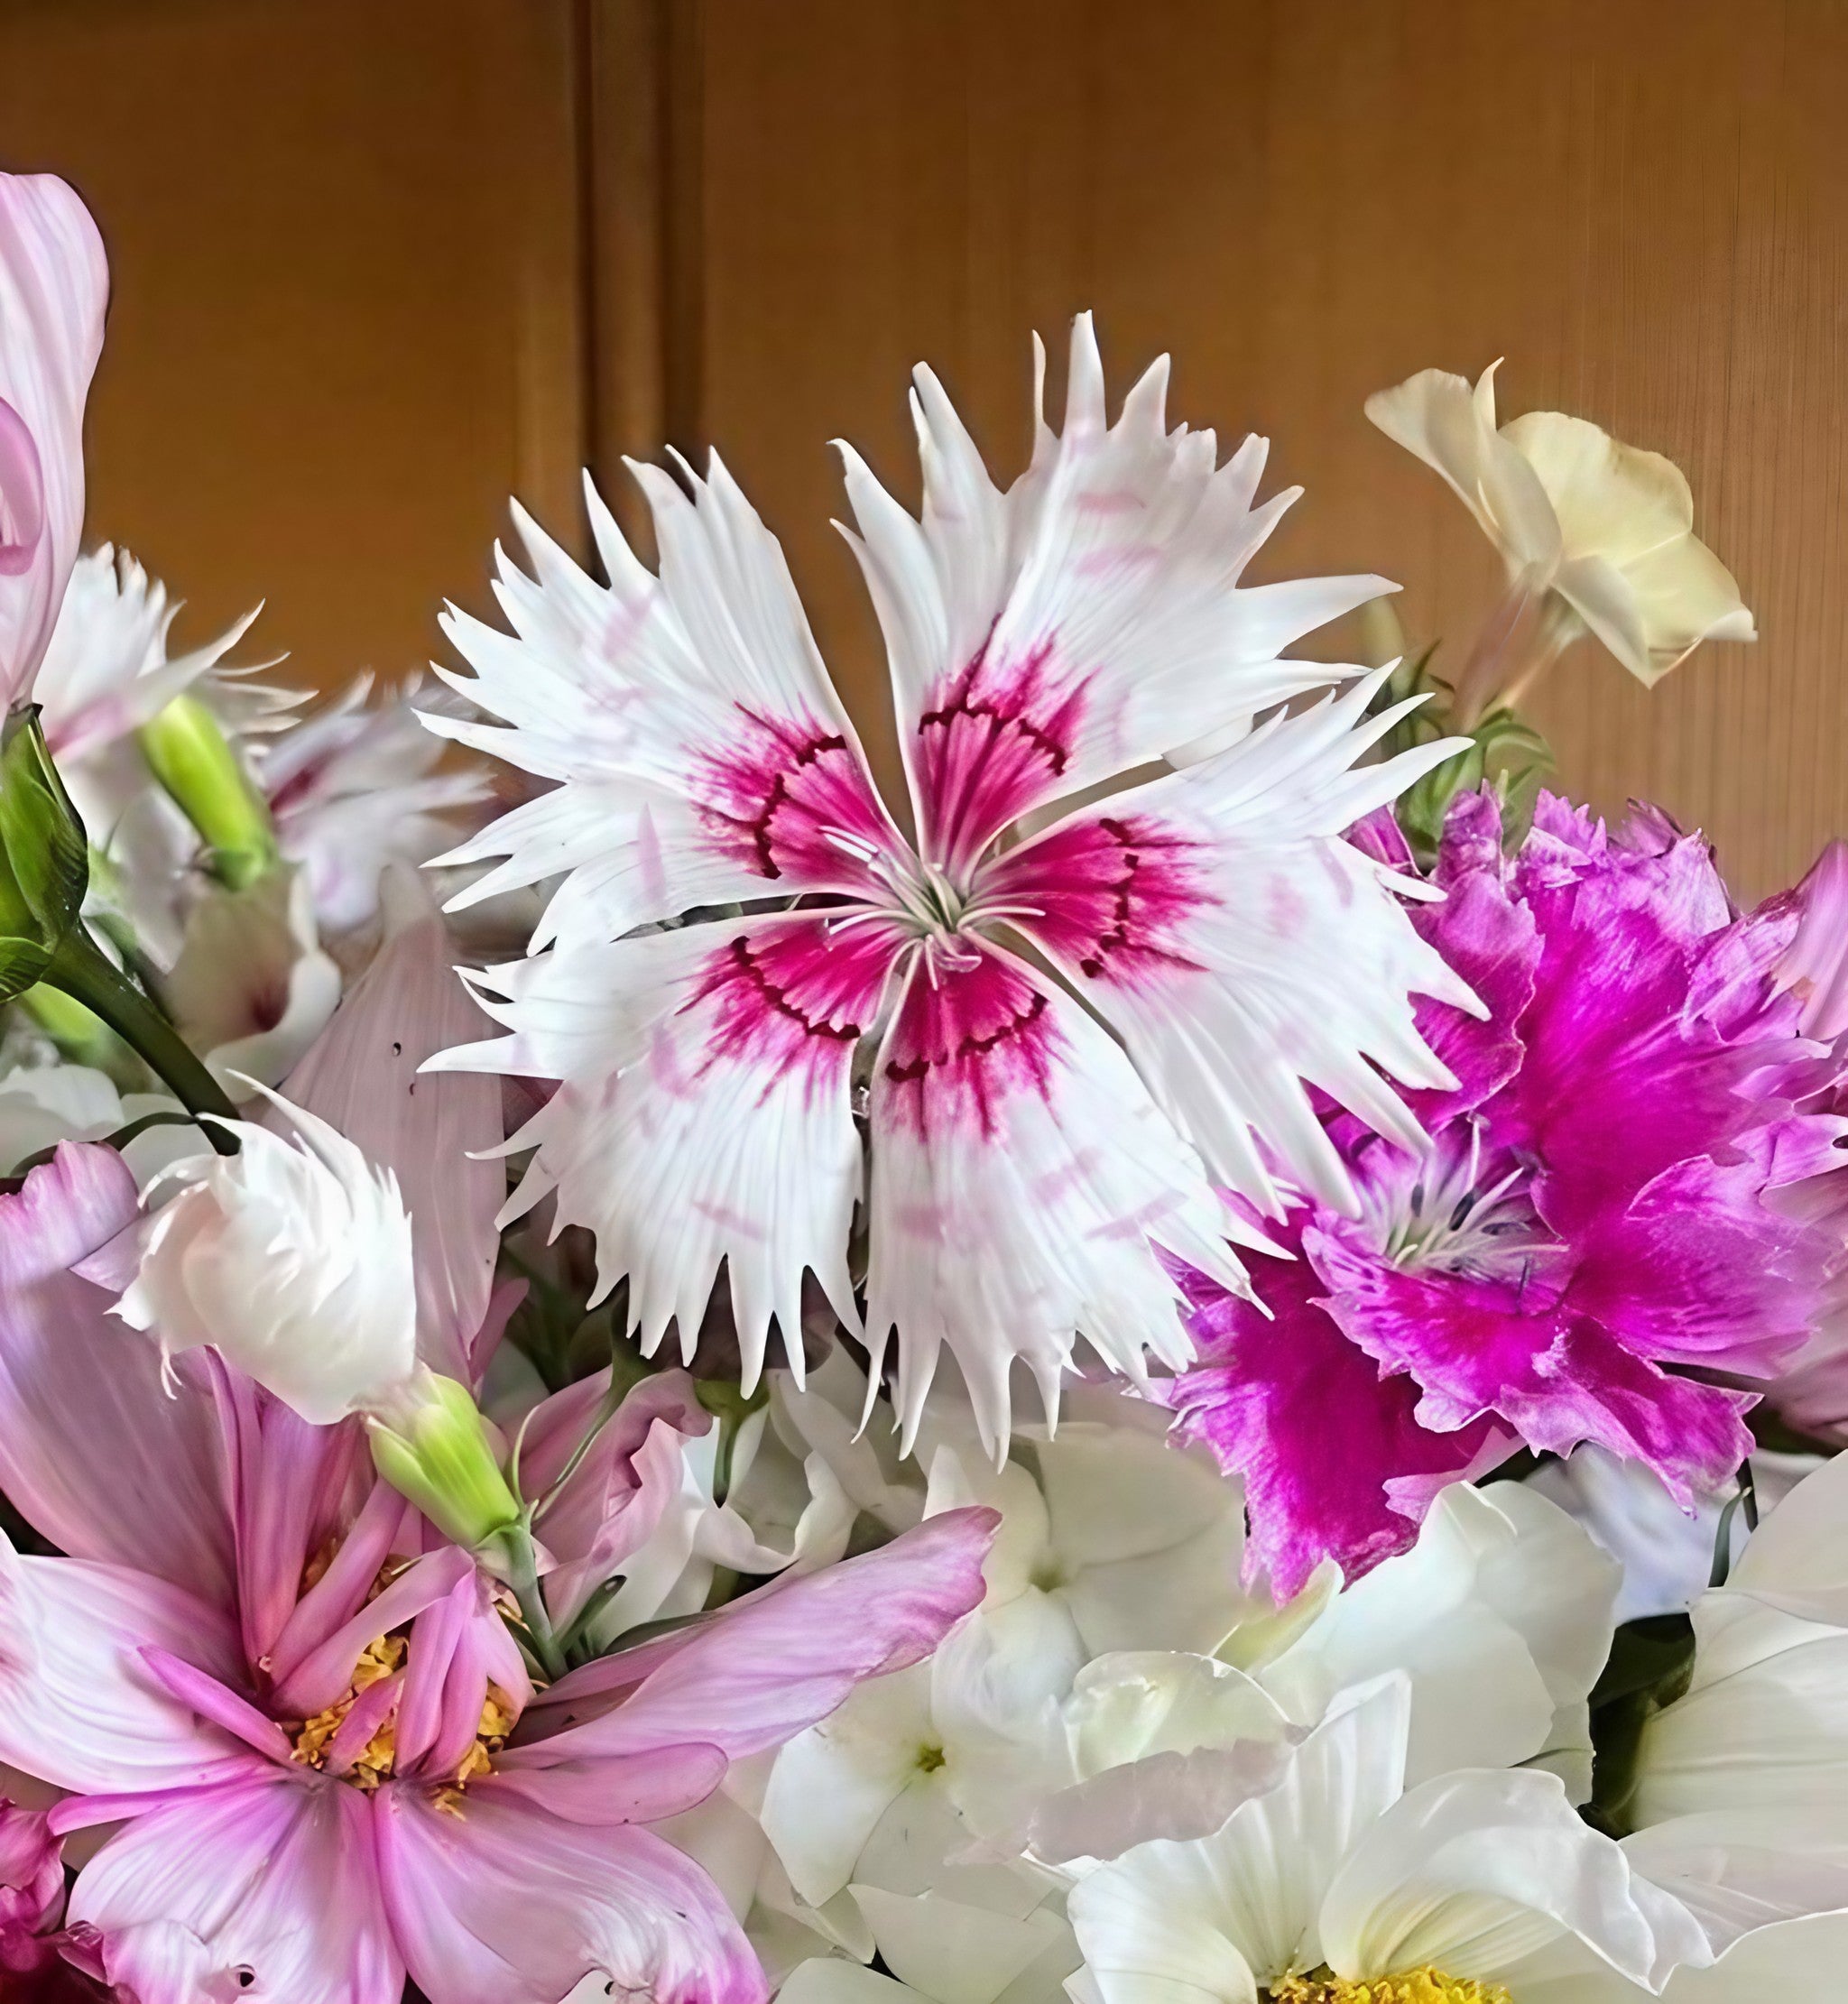 Dianthus Heddewegii Gaiety Single Mix flowers arranged in a vase